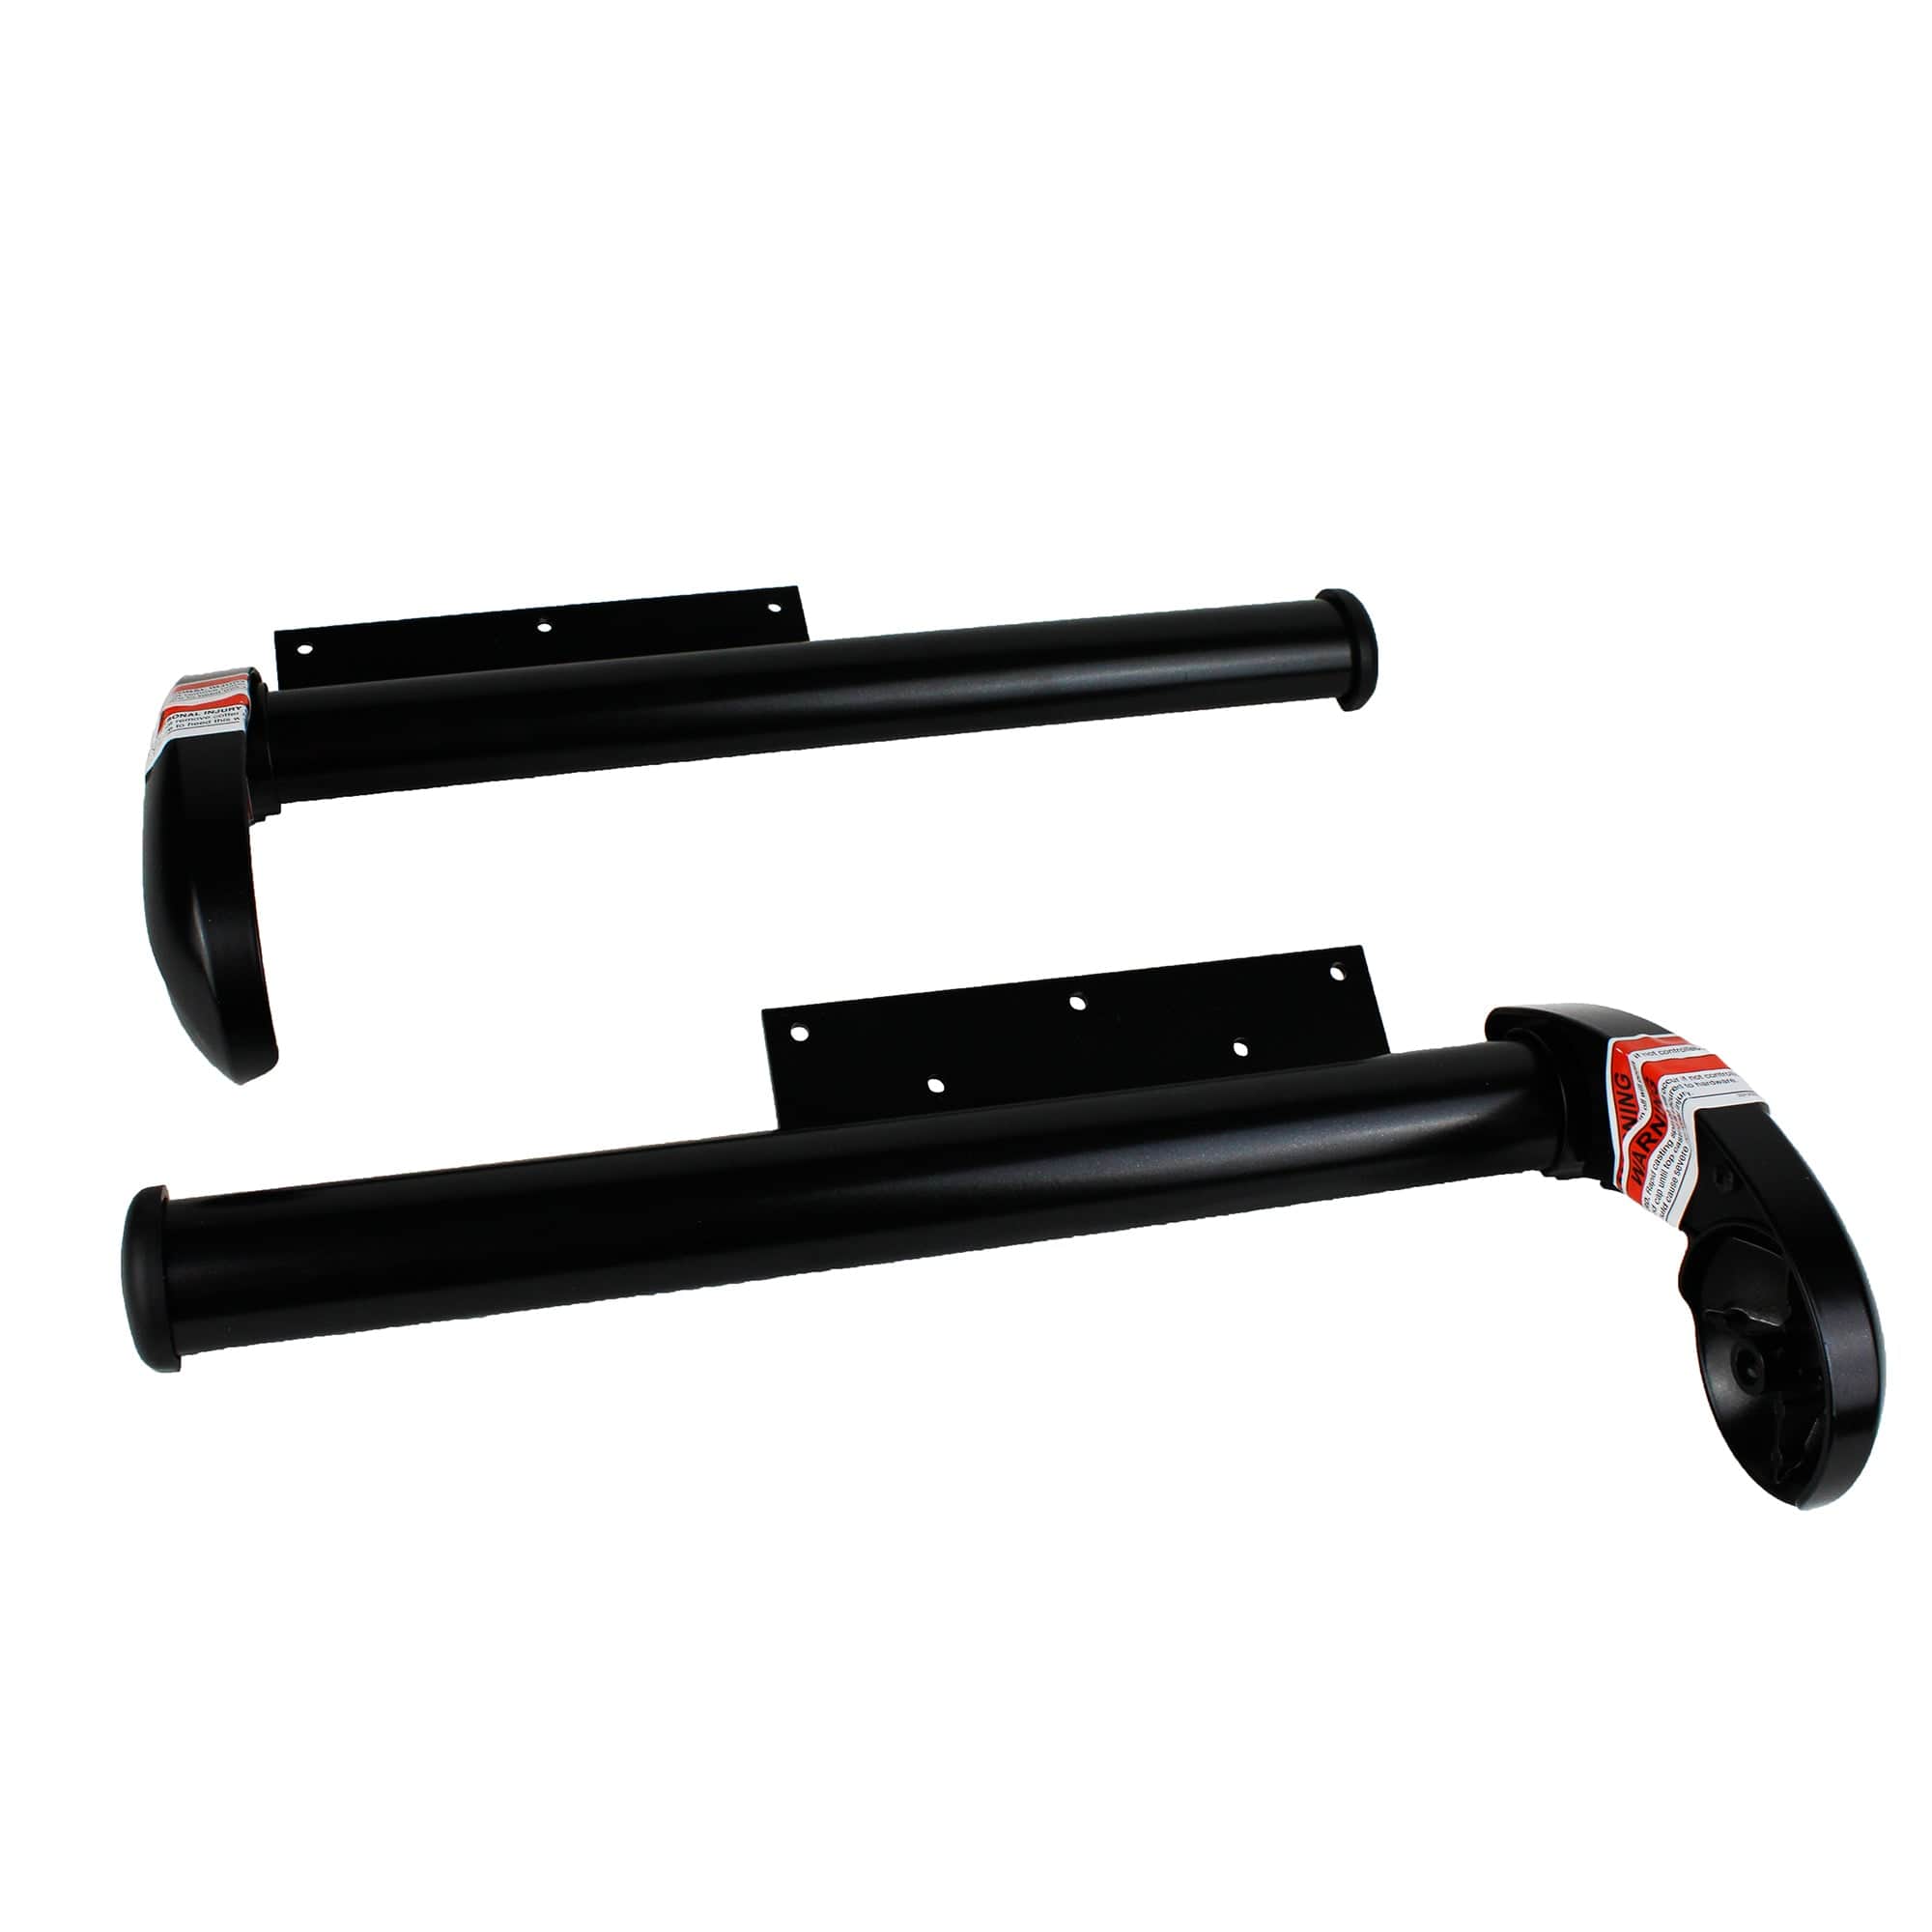 Dometic 9800015.401U 15" Awning Slide Topper Bracket Hardware Kit - Black